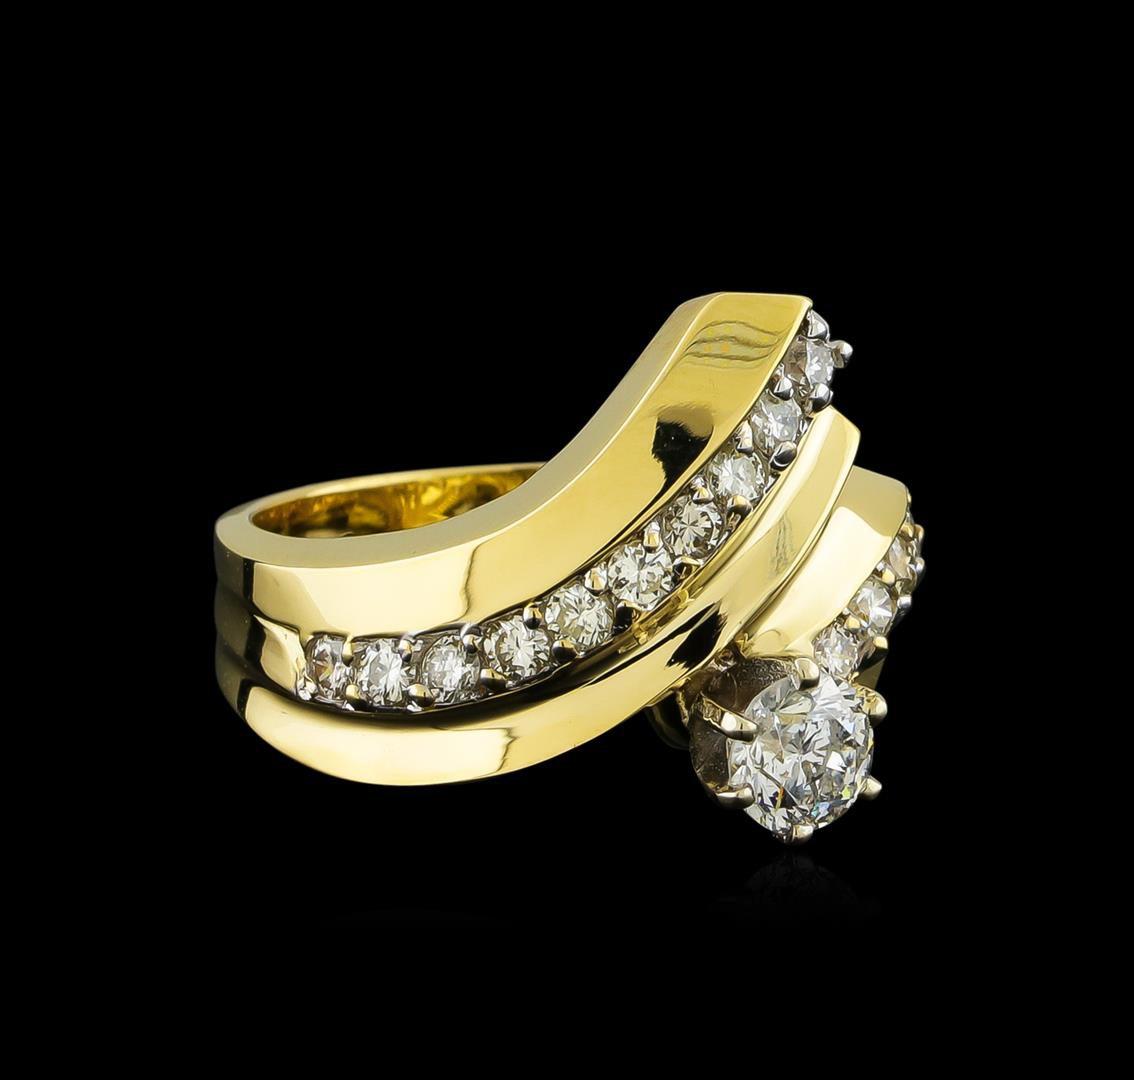 1.03 ctw Diamond Ring - 14KT Yellow Gold